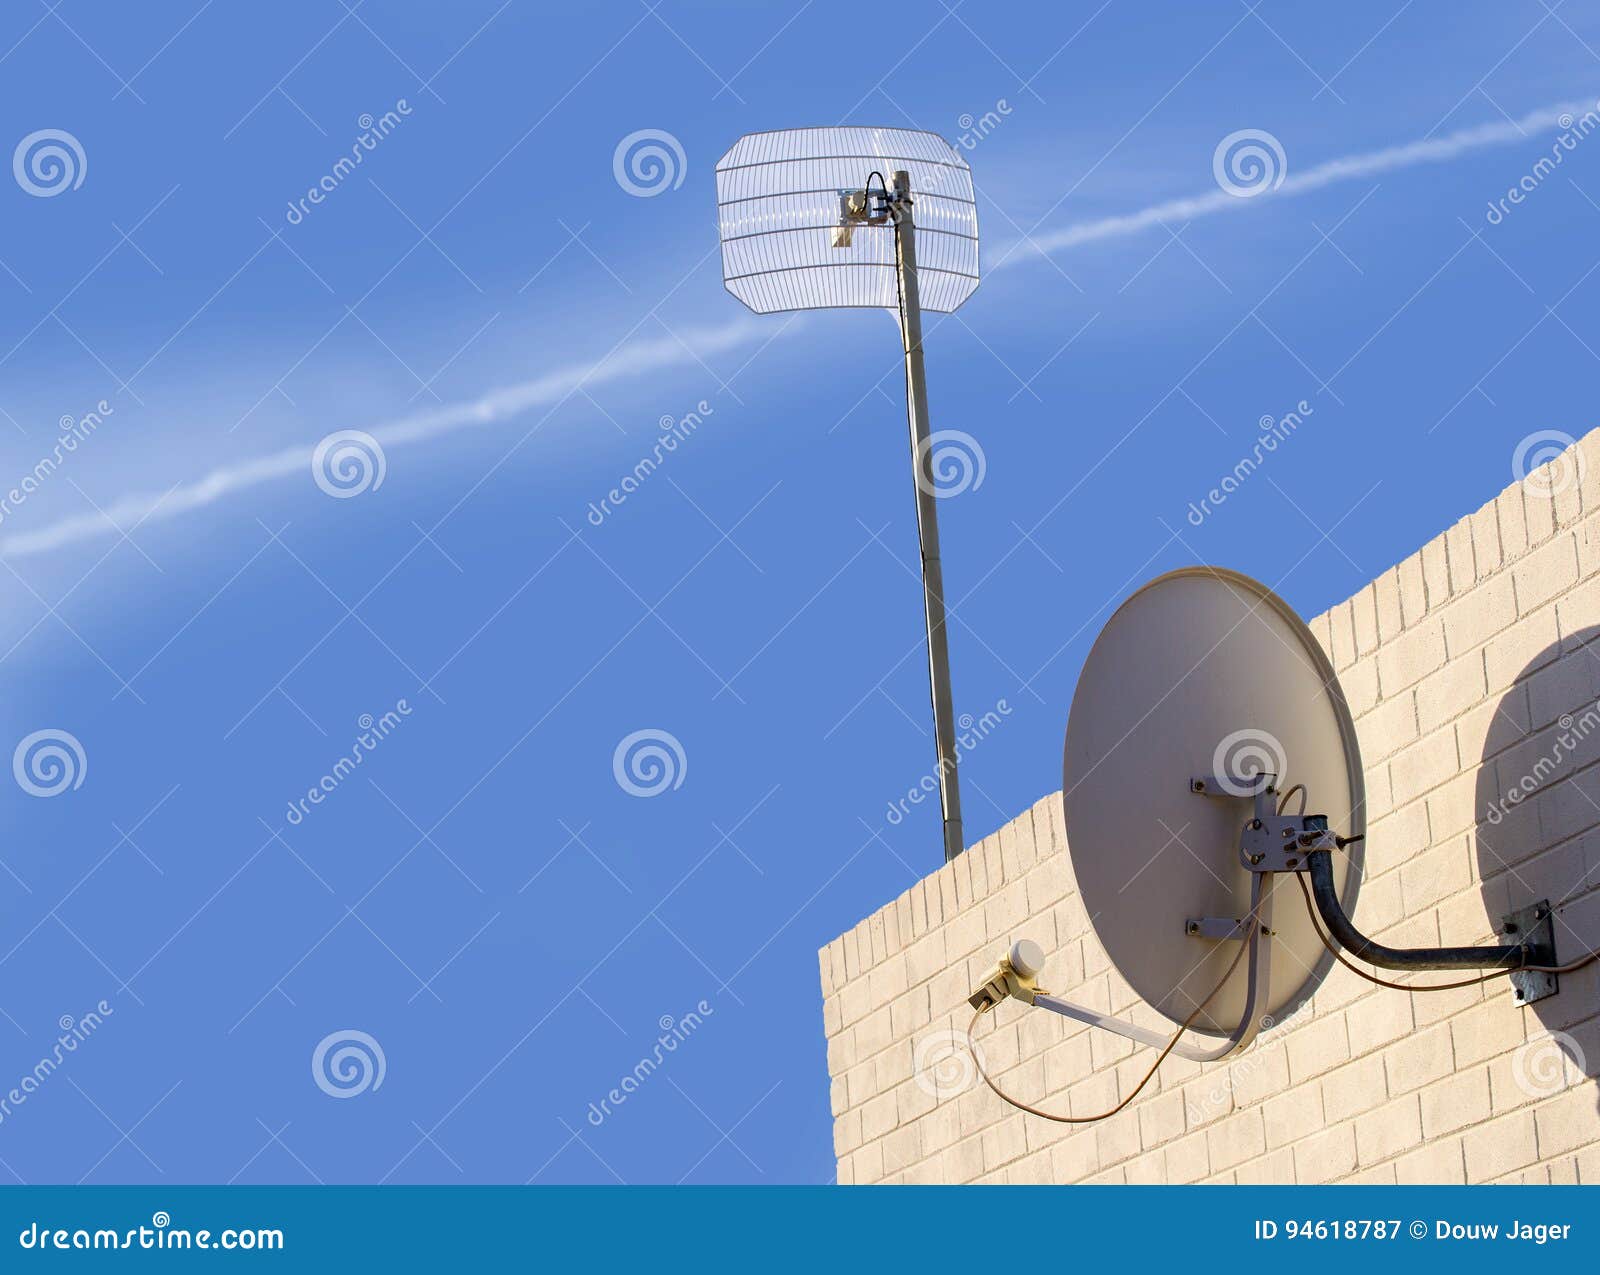 Satellite Dish And Wireless Antenna Stock Image Image of